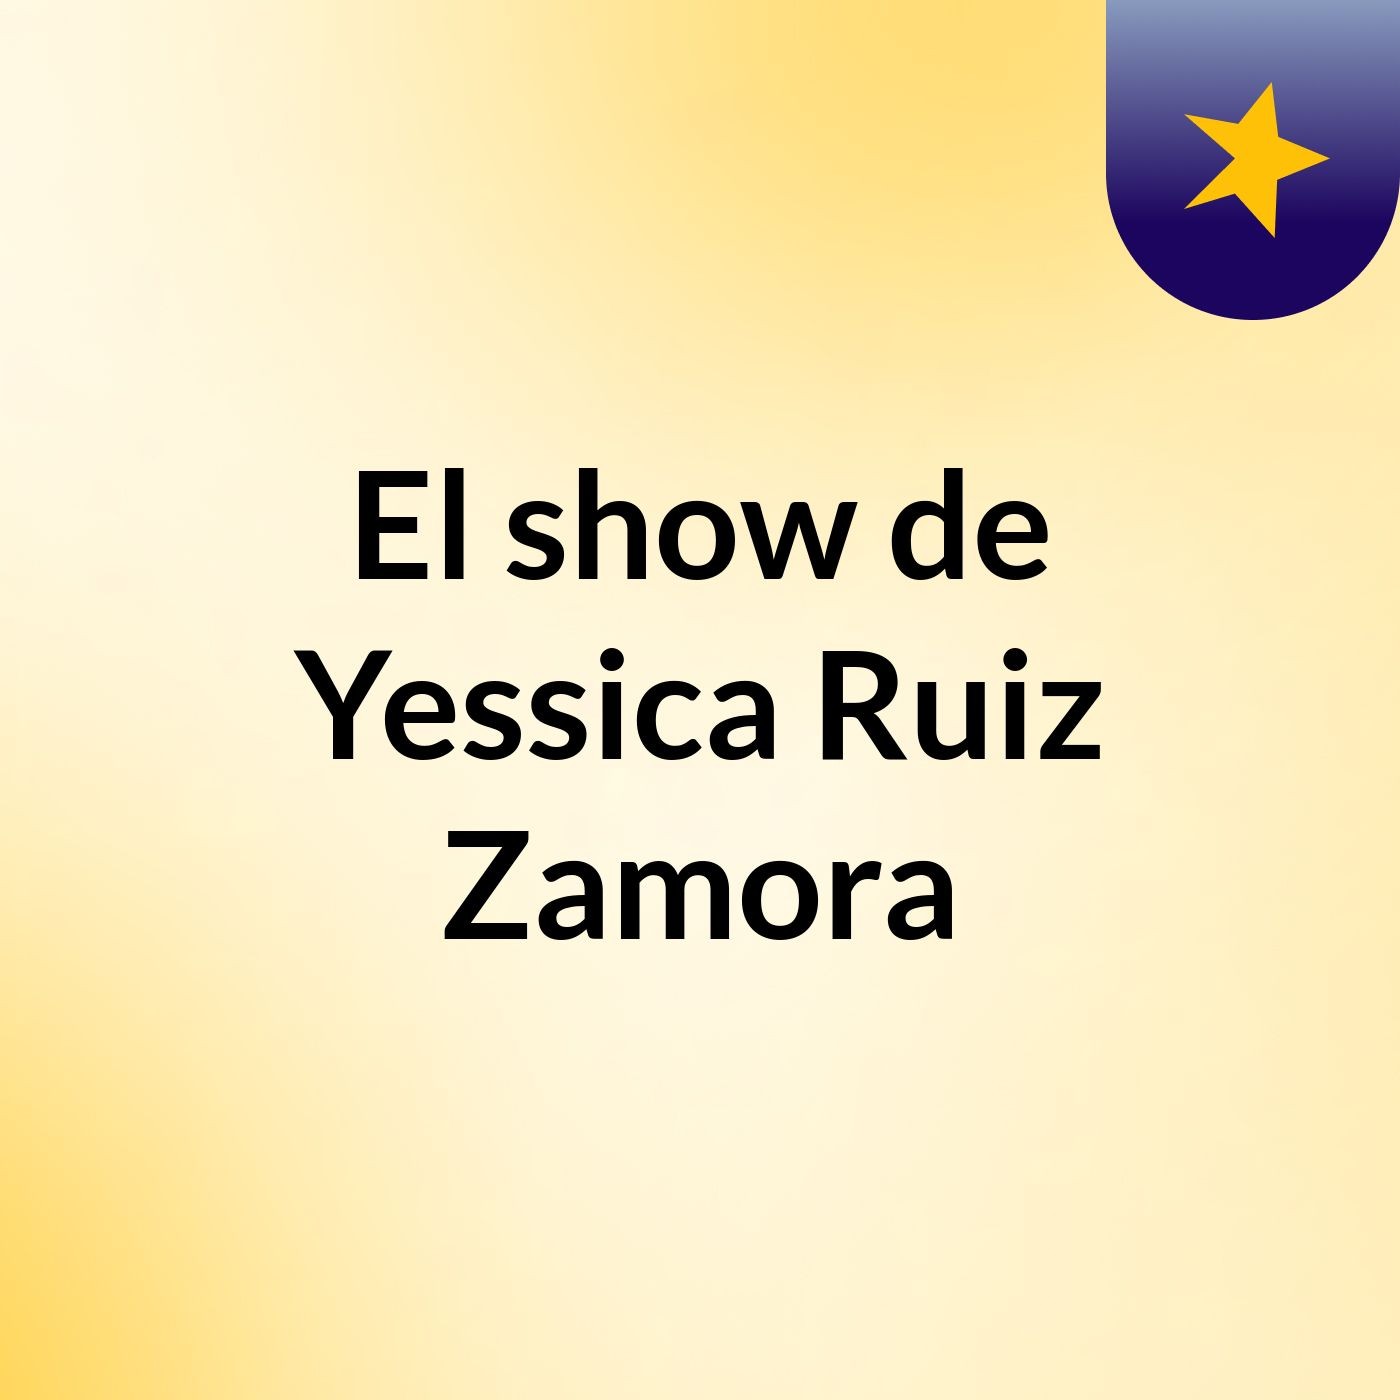 El show de Yessica Ruiz Zamora